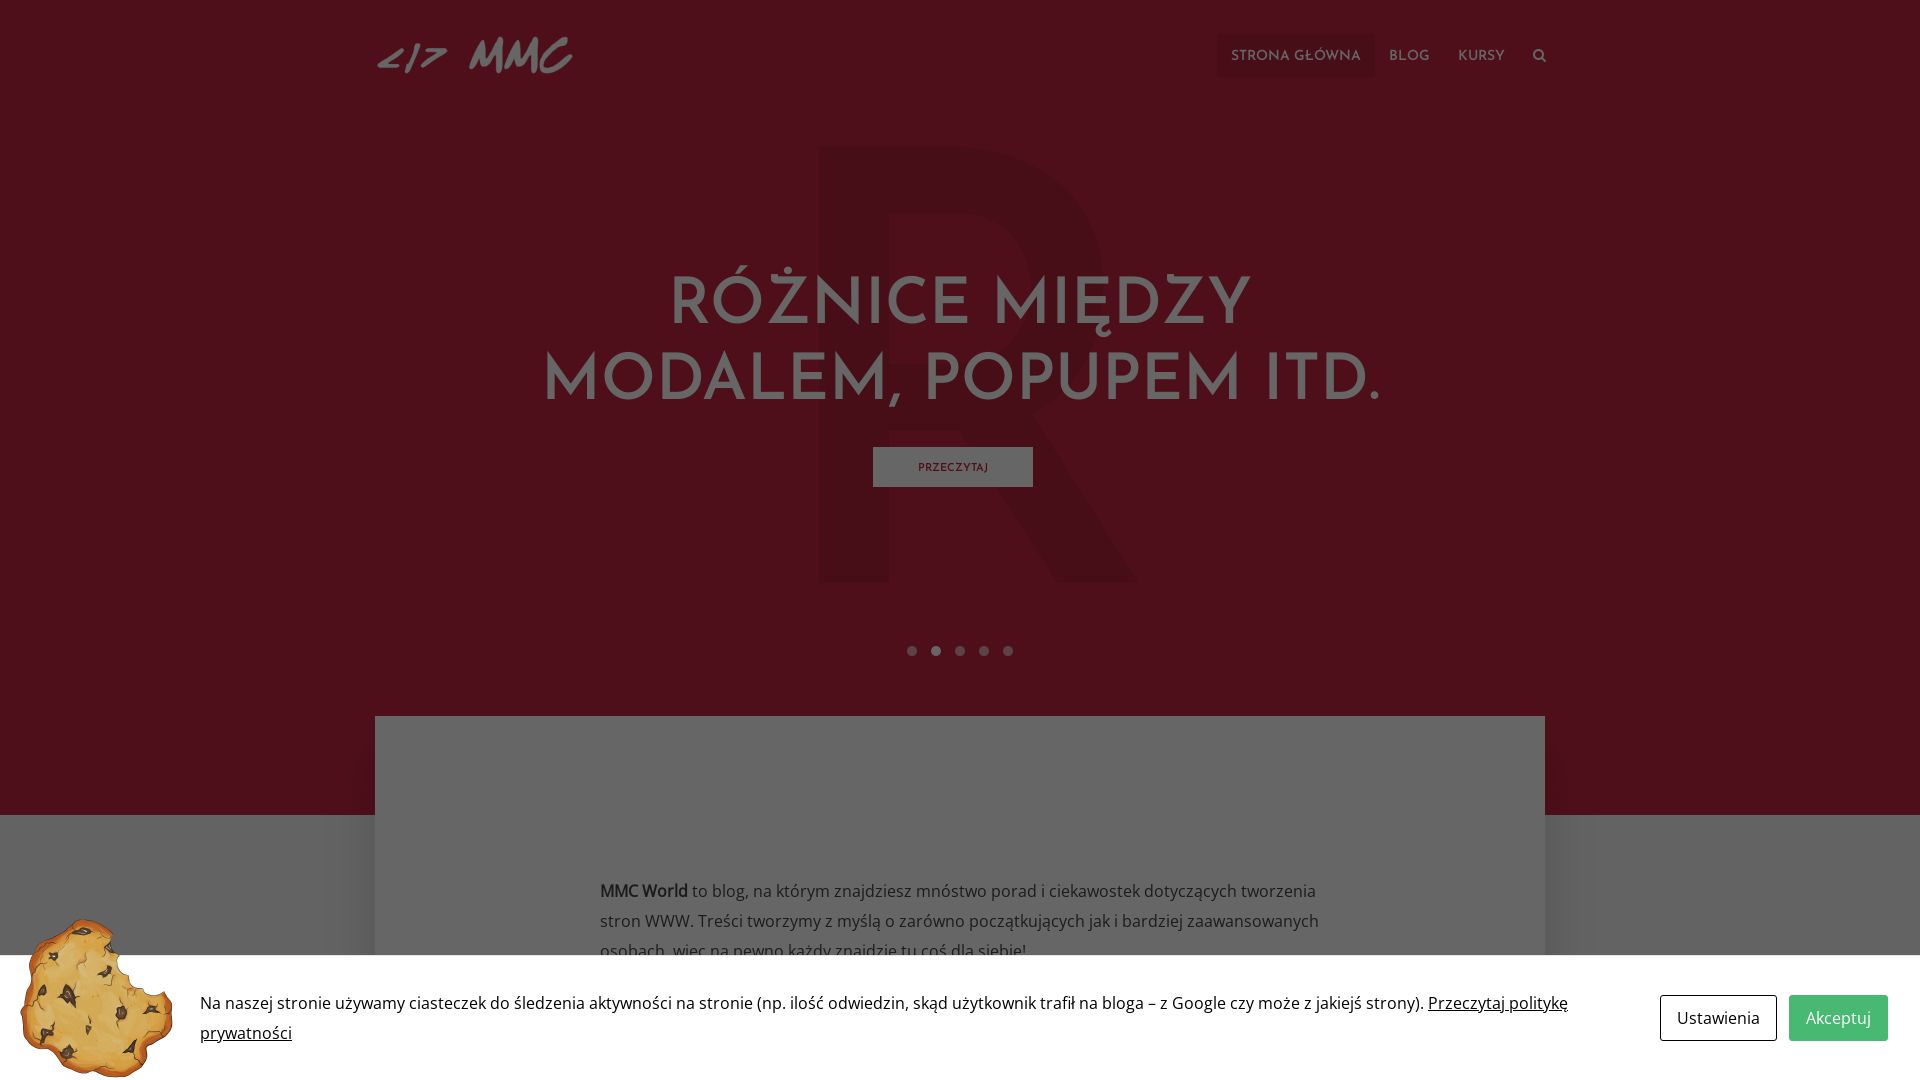 Website status mmcworld.pl is   ONLINE